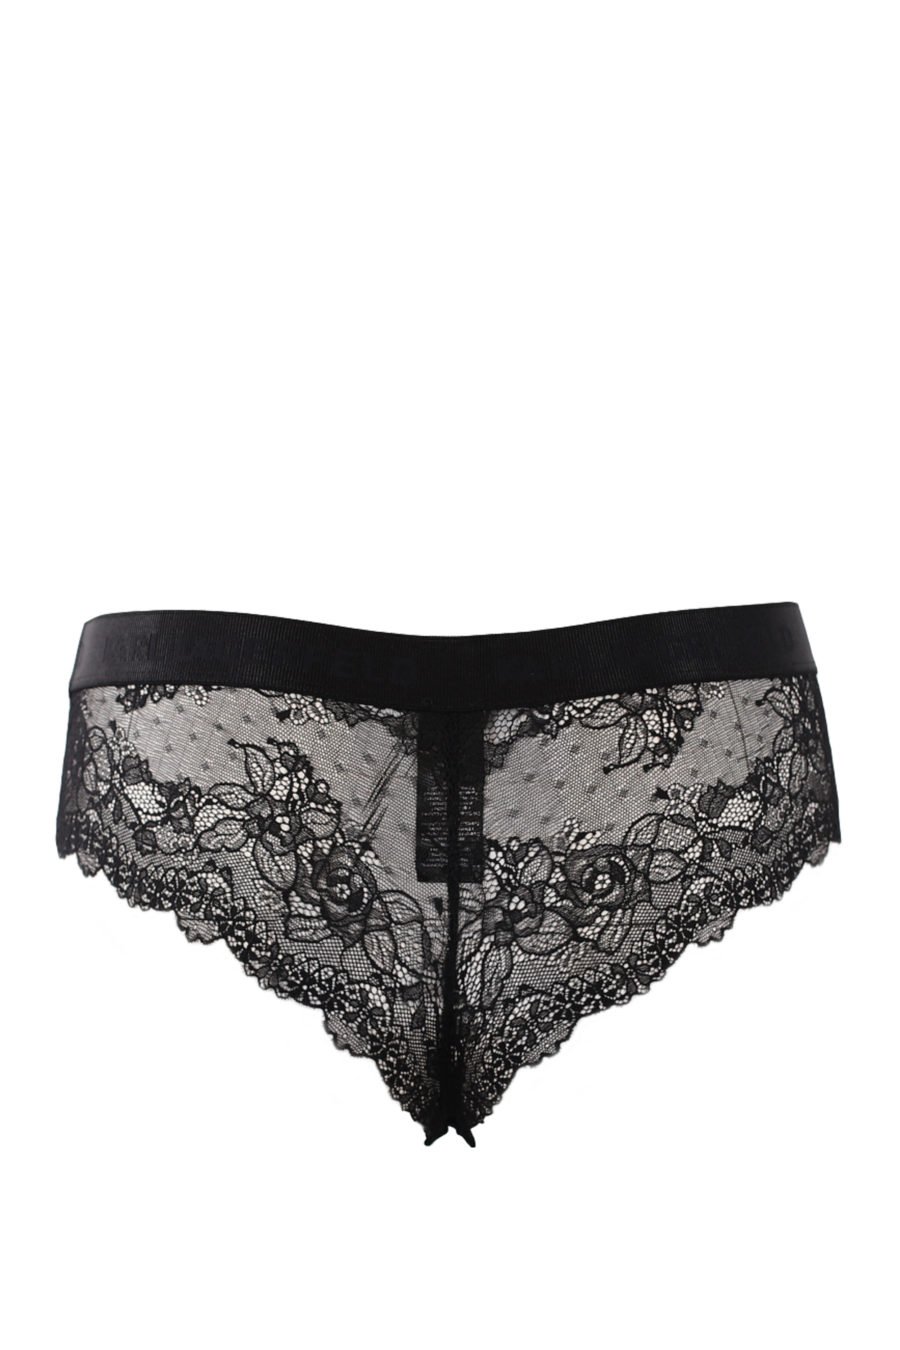 Black lace panties - IMG 0400